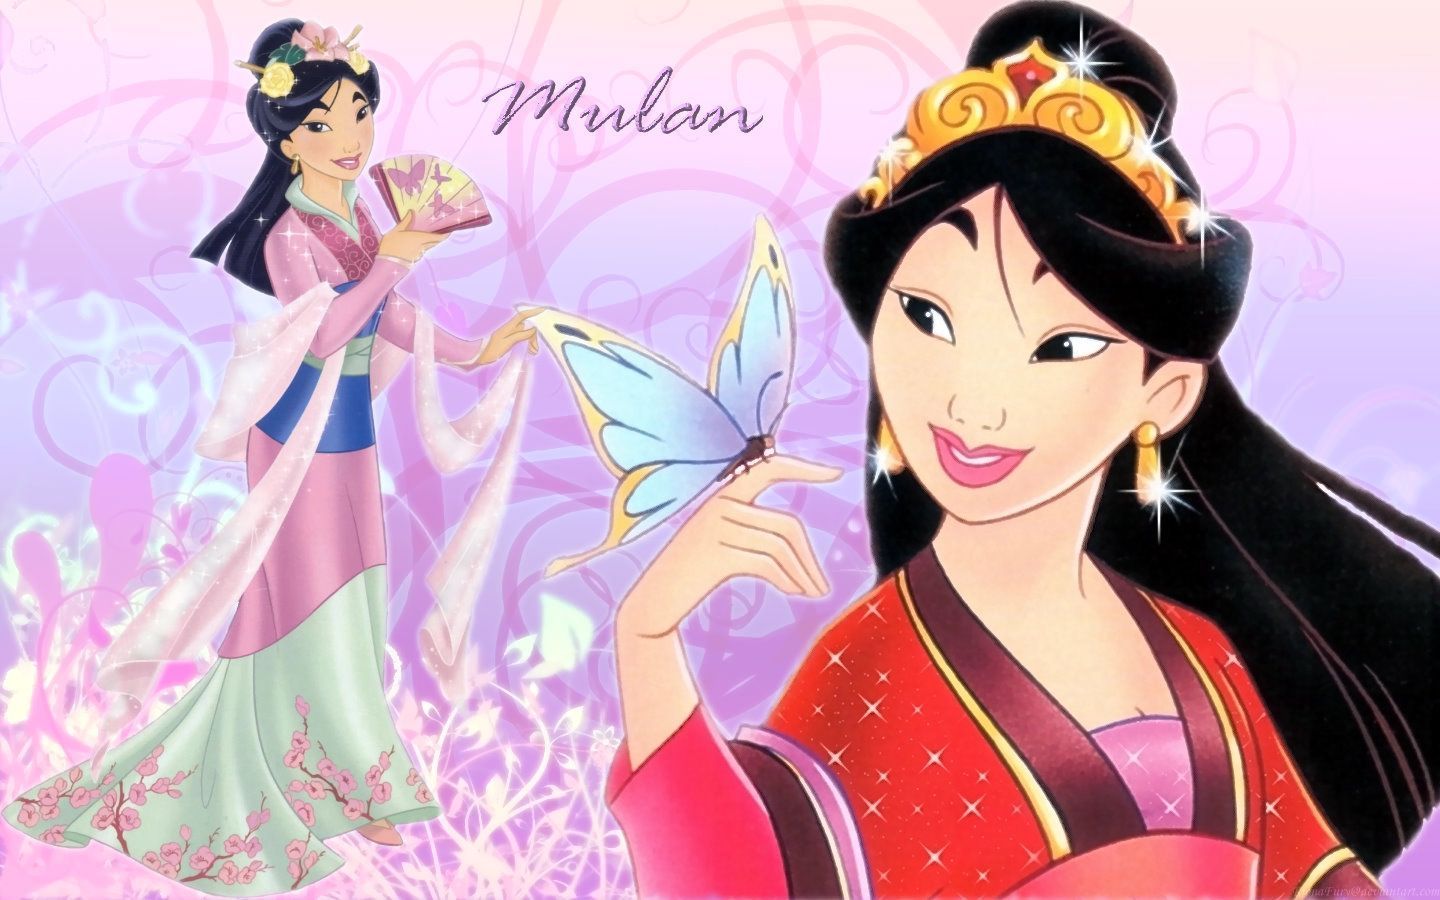 Disney Princess Wallpaper: Disney Princess Mulan. Disney princess wallpaper, Disney princess fan art, Disney princess